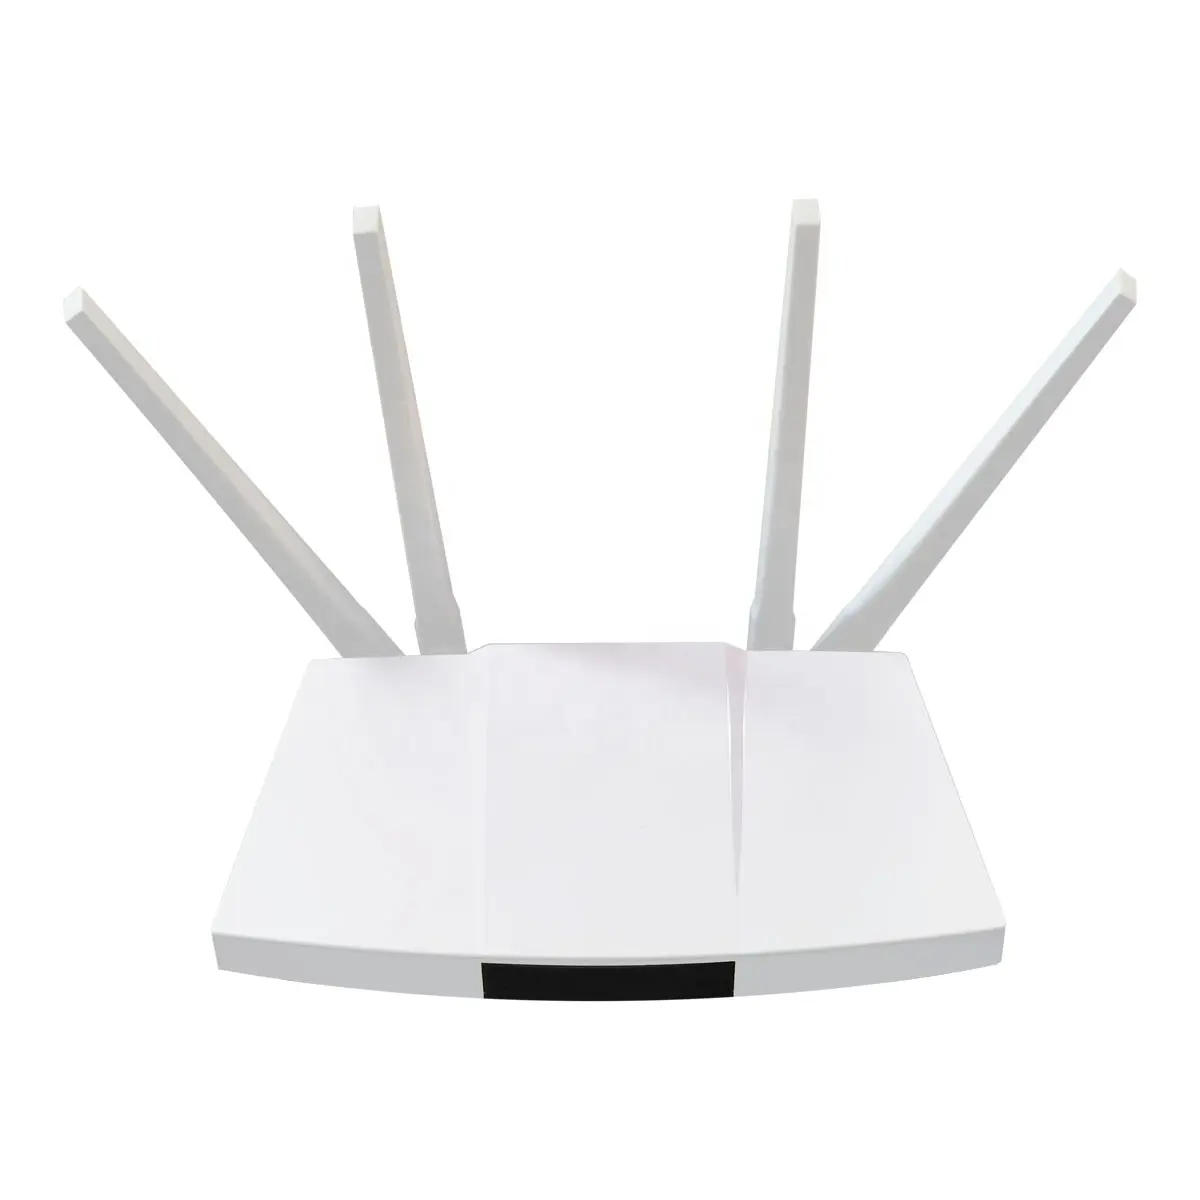 PPPOE Modem ADSL 4G Cat4 CPE Router SIM Card Slot Modem Wireless 2.4G WiFi Router Wireless Router